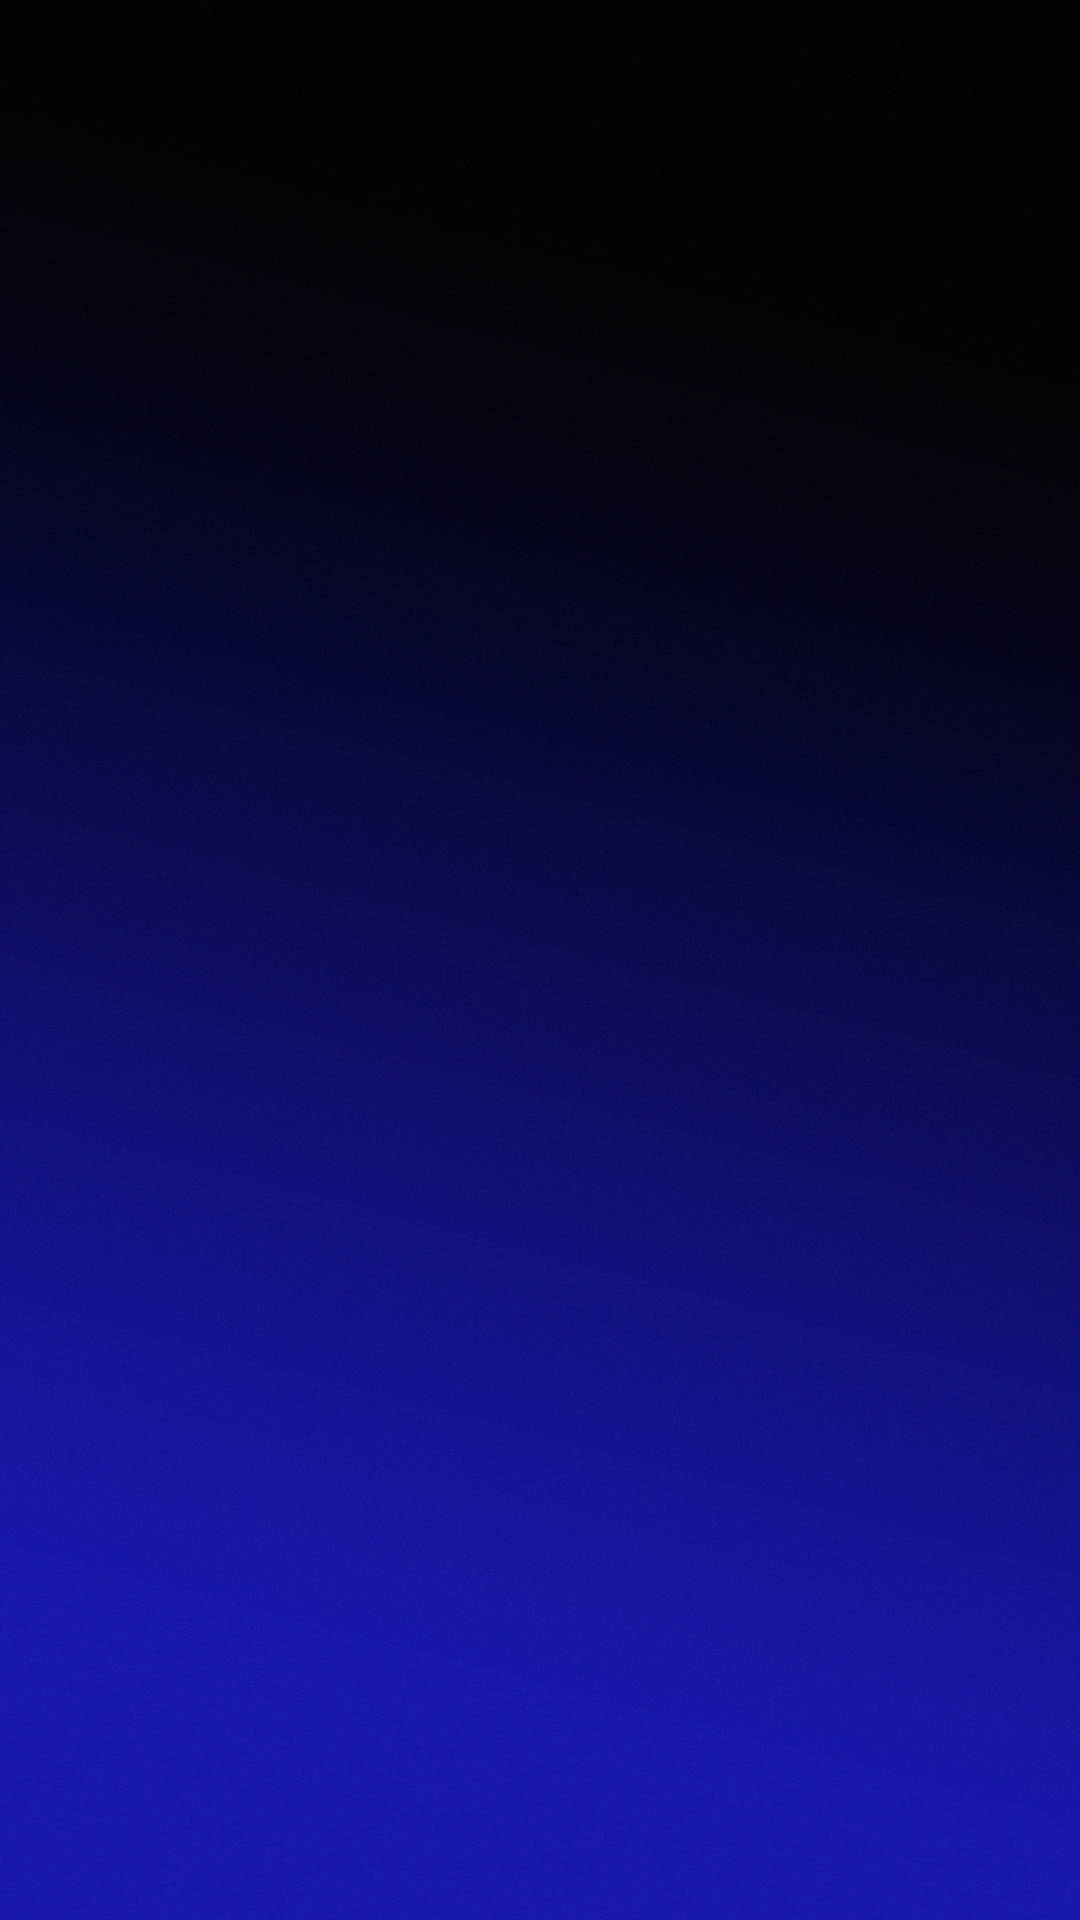 Google Pixel 4k Gradient Blue And Black Background